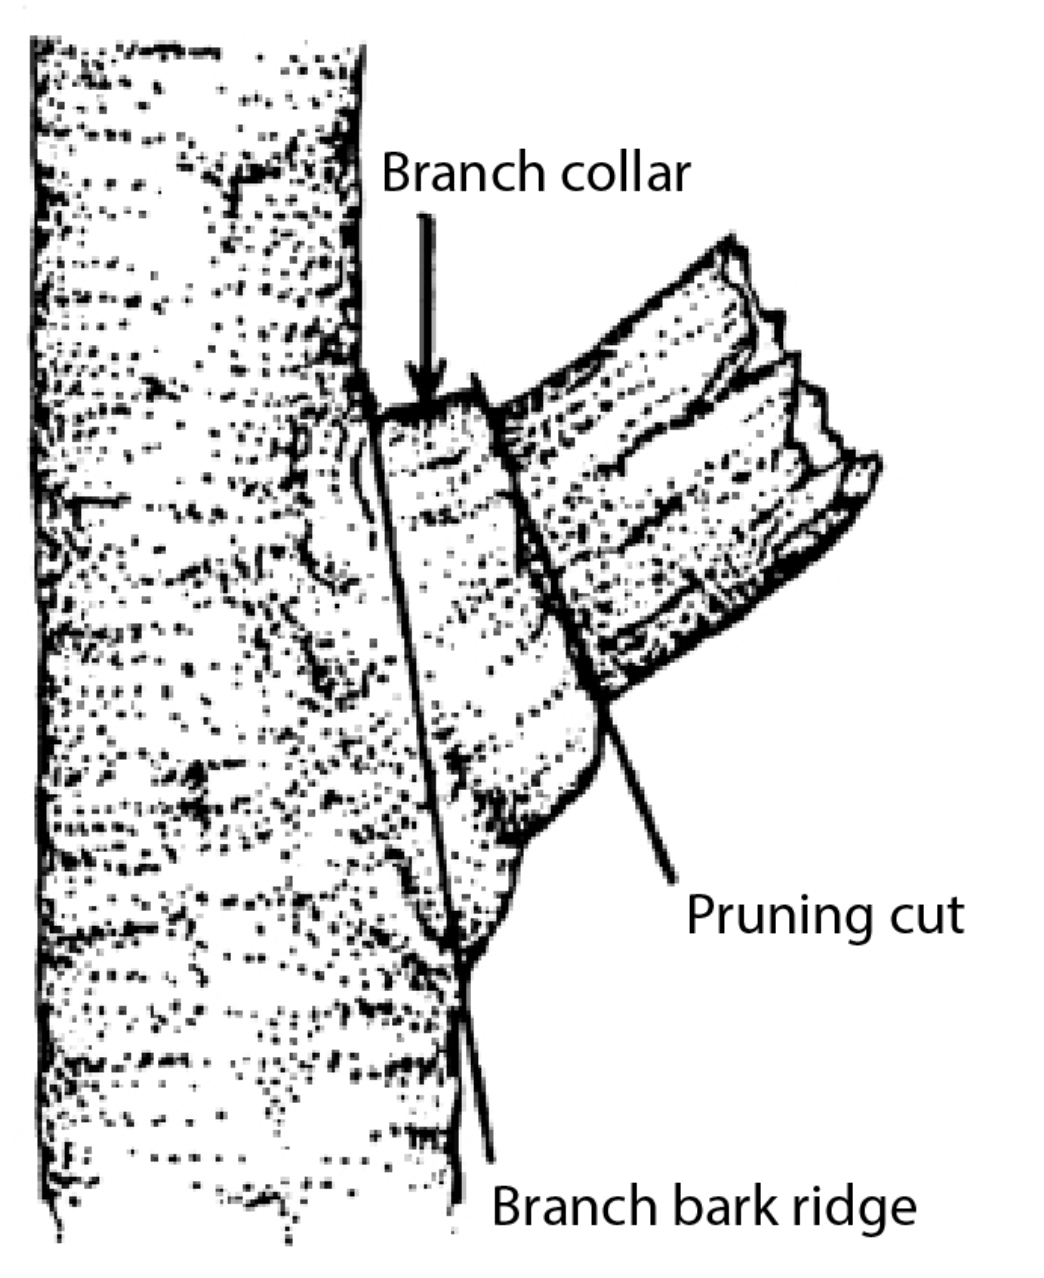 Diagram of pruning cuts